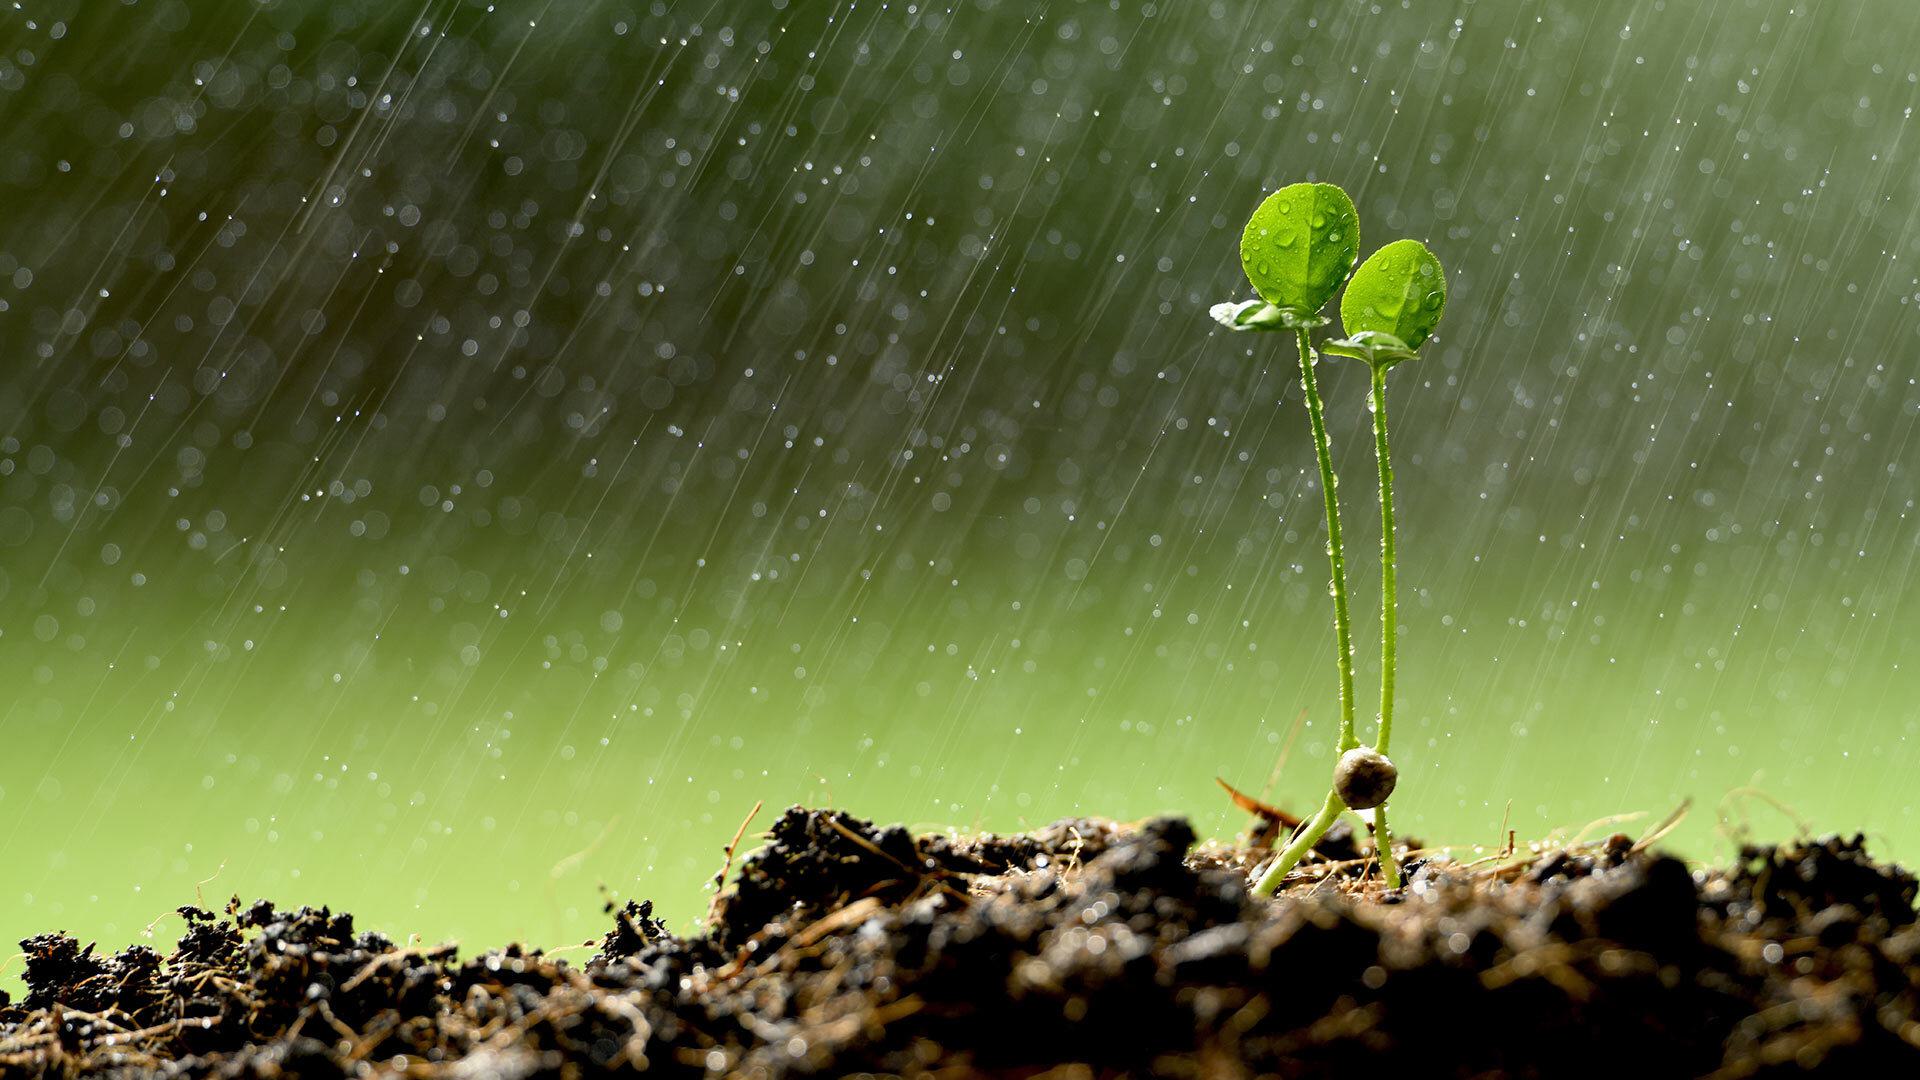 rain falls on plant